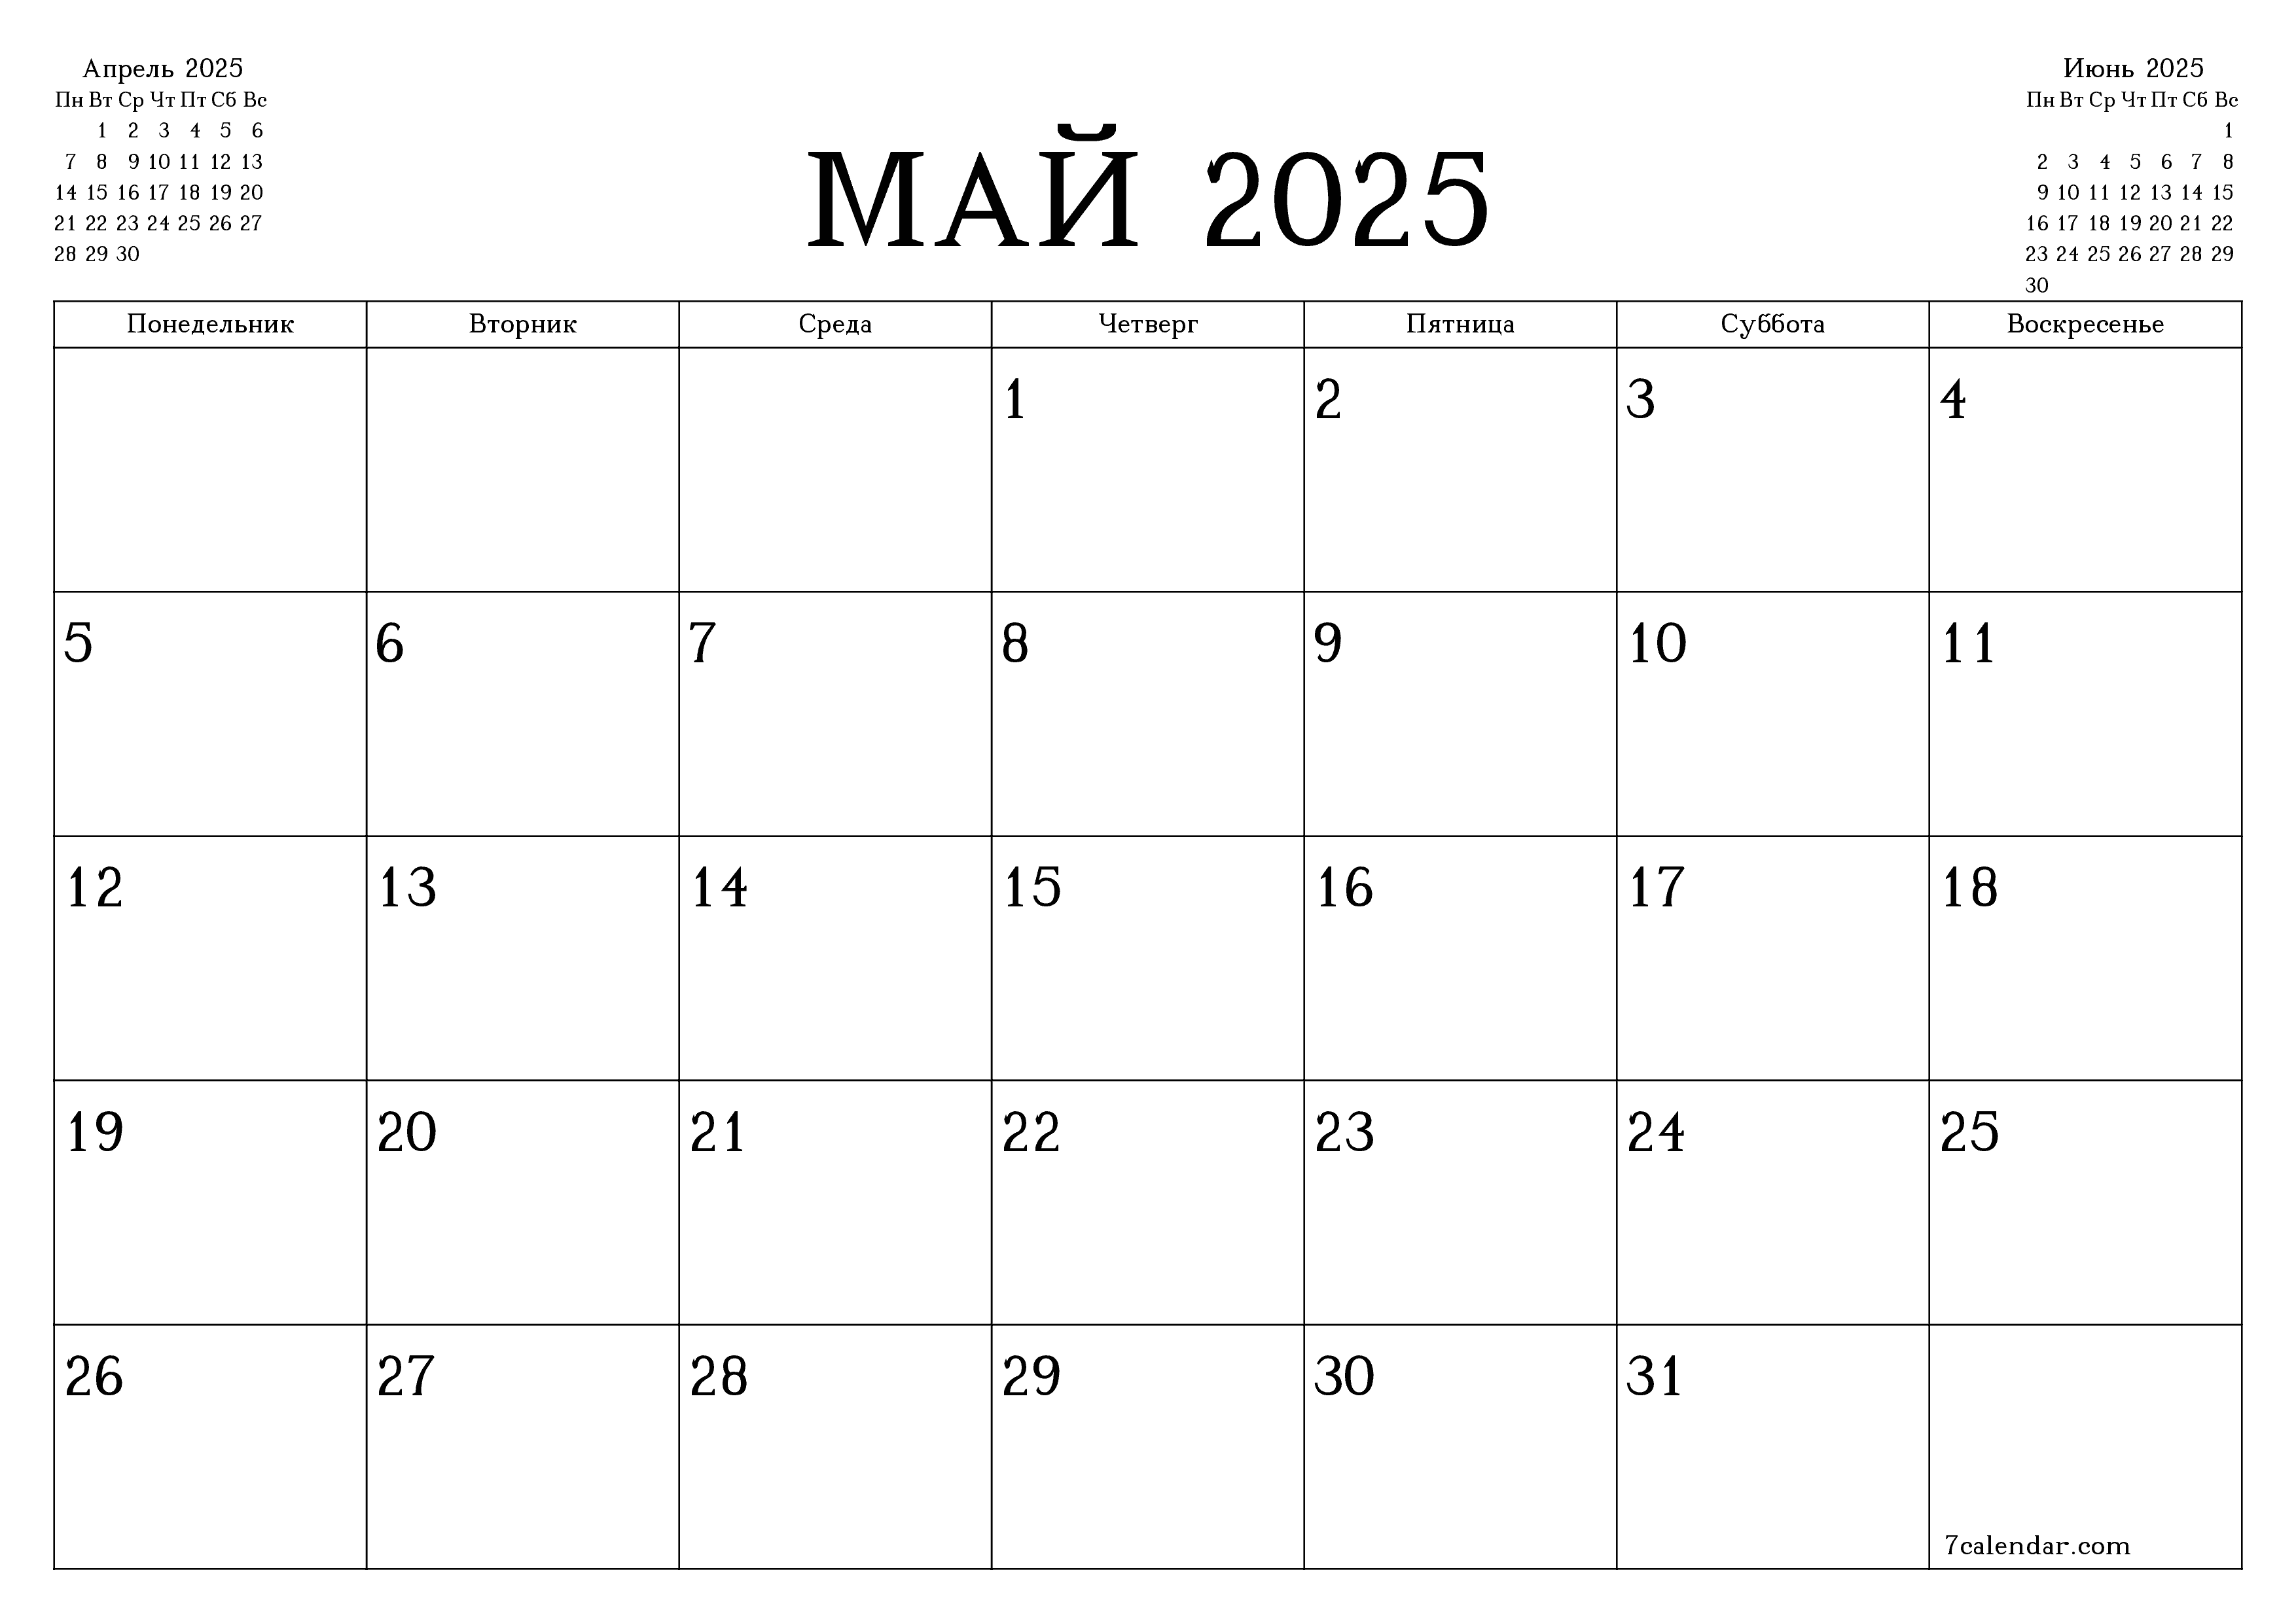 Календари и планеры для печати на месяц Май 2025 A4, A3 в PDF и PNG -  7calendar